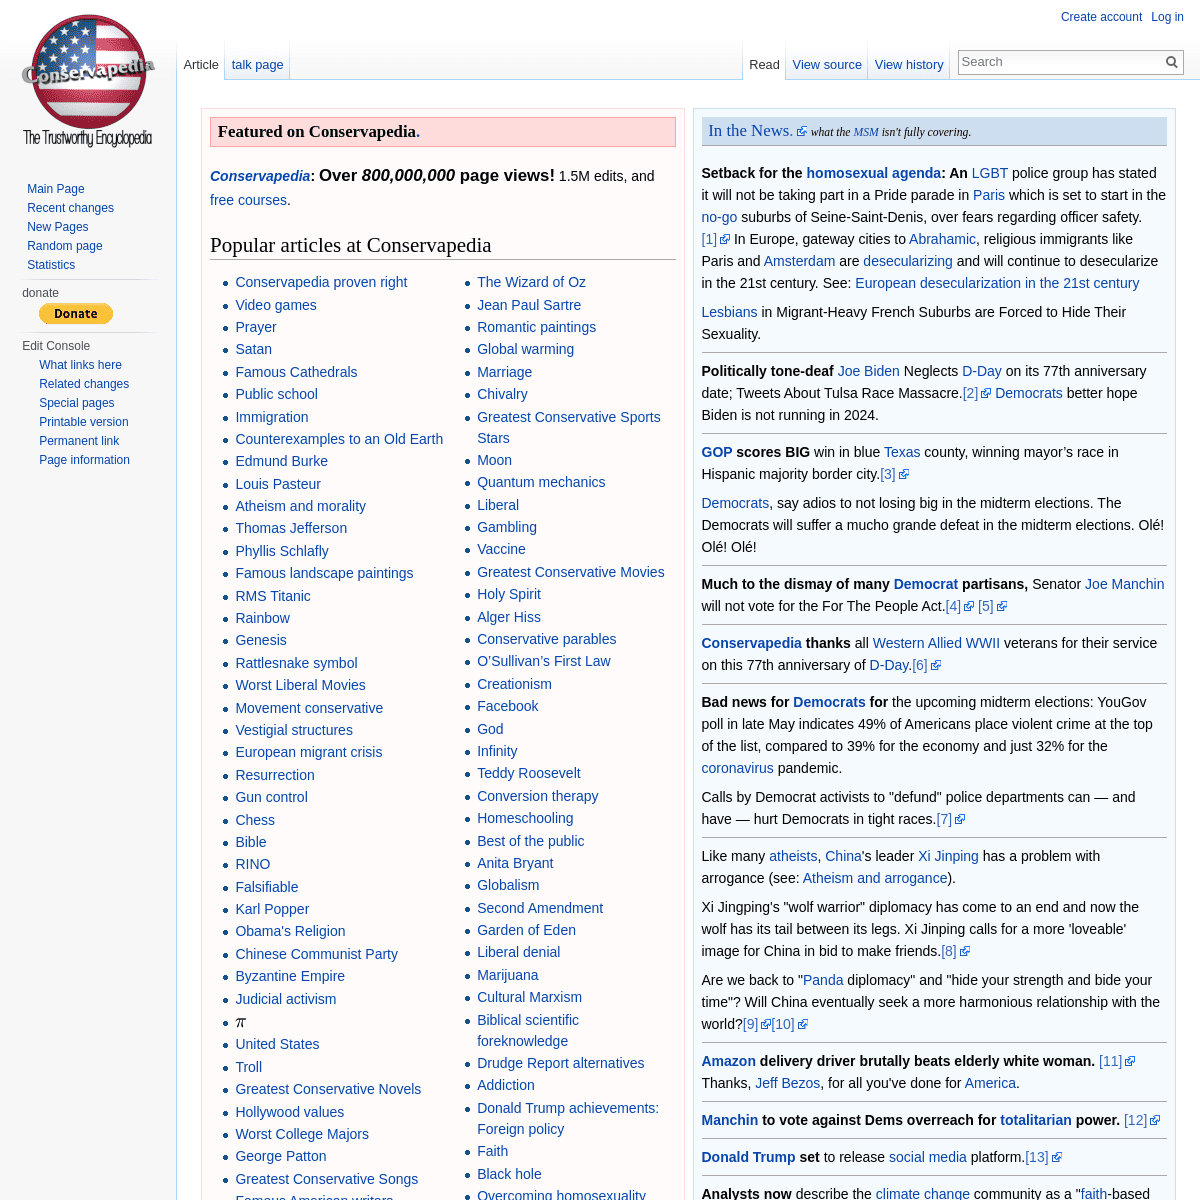 A complete backup of https://conservapedia.com